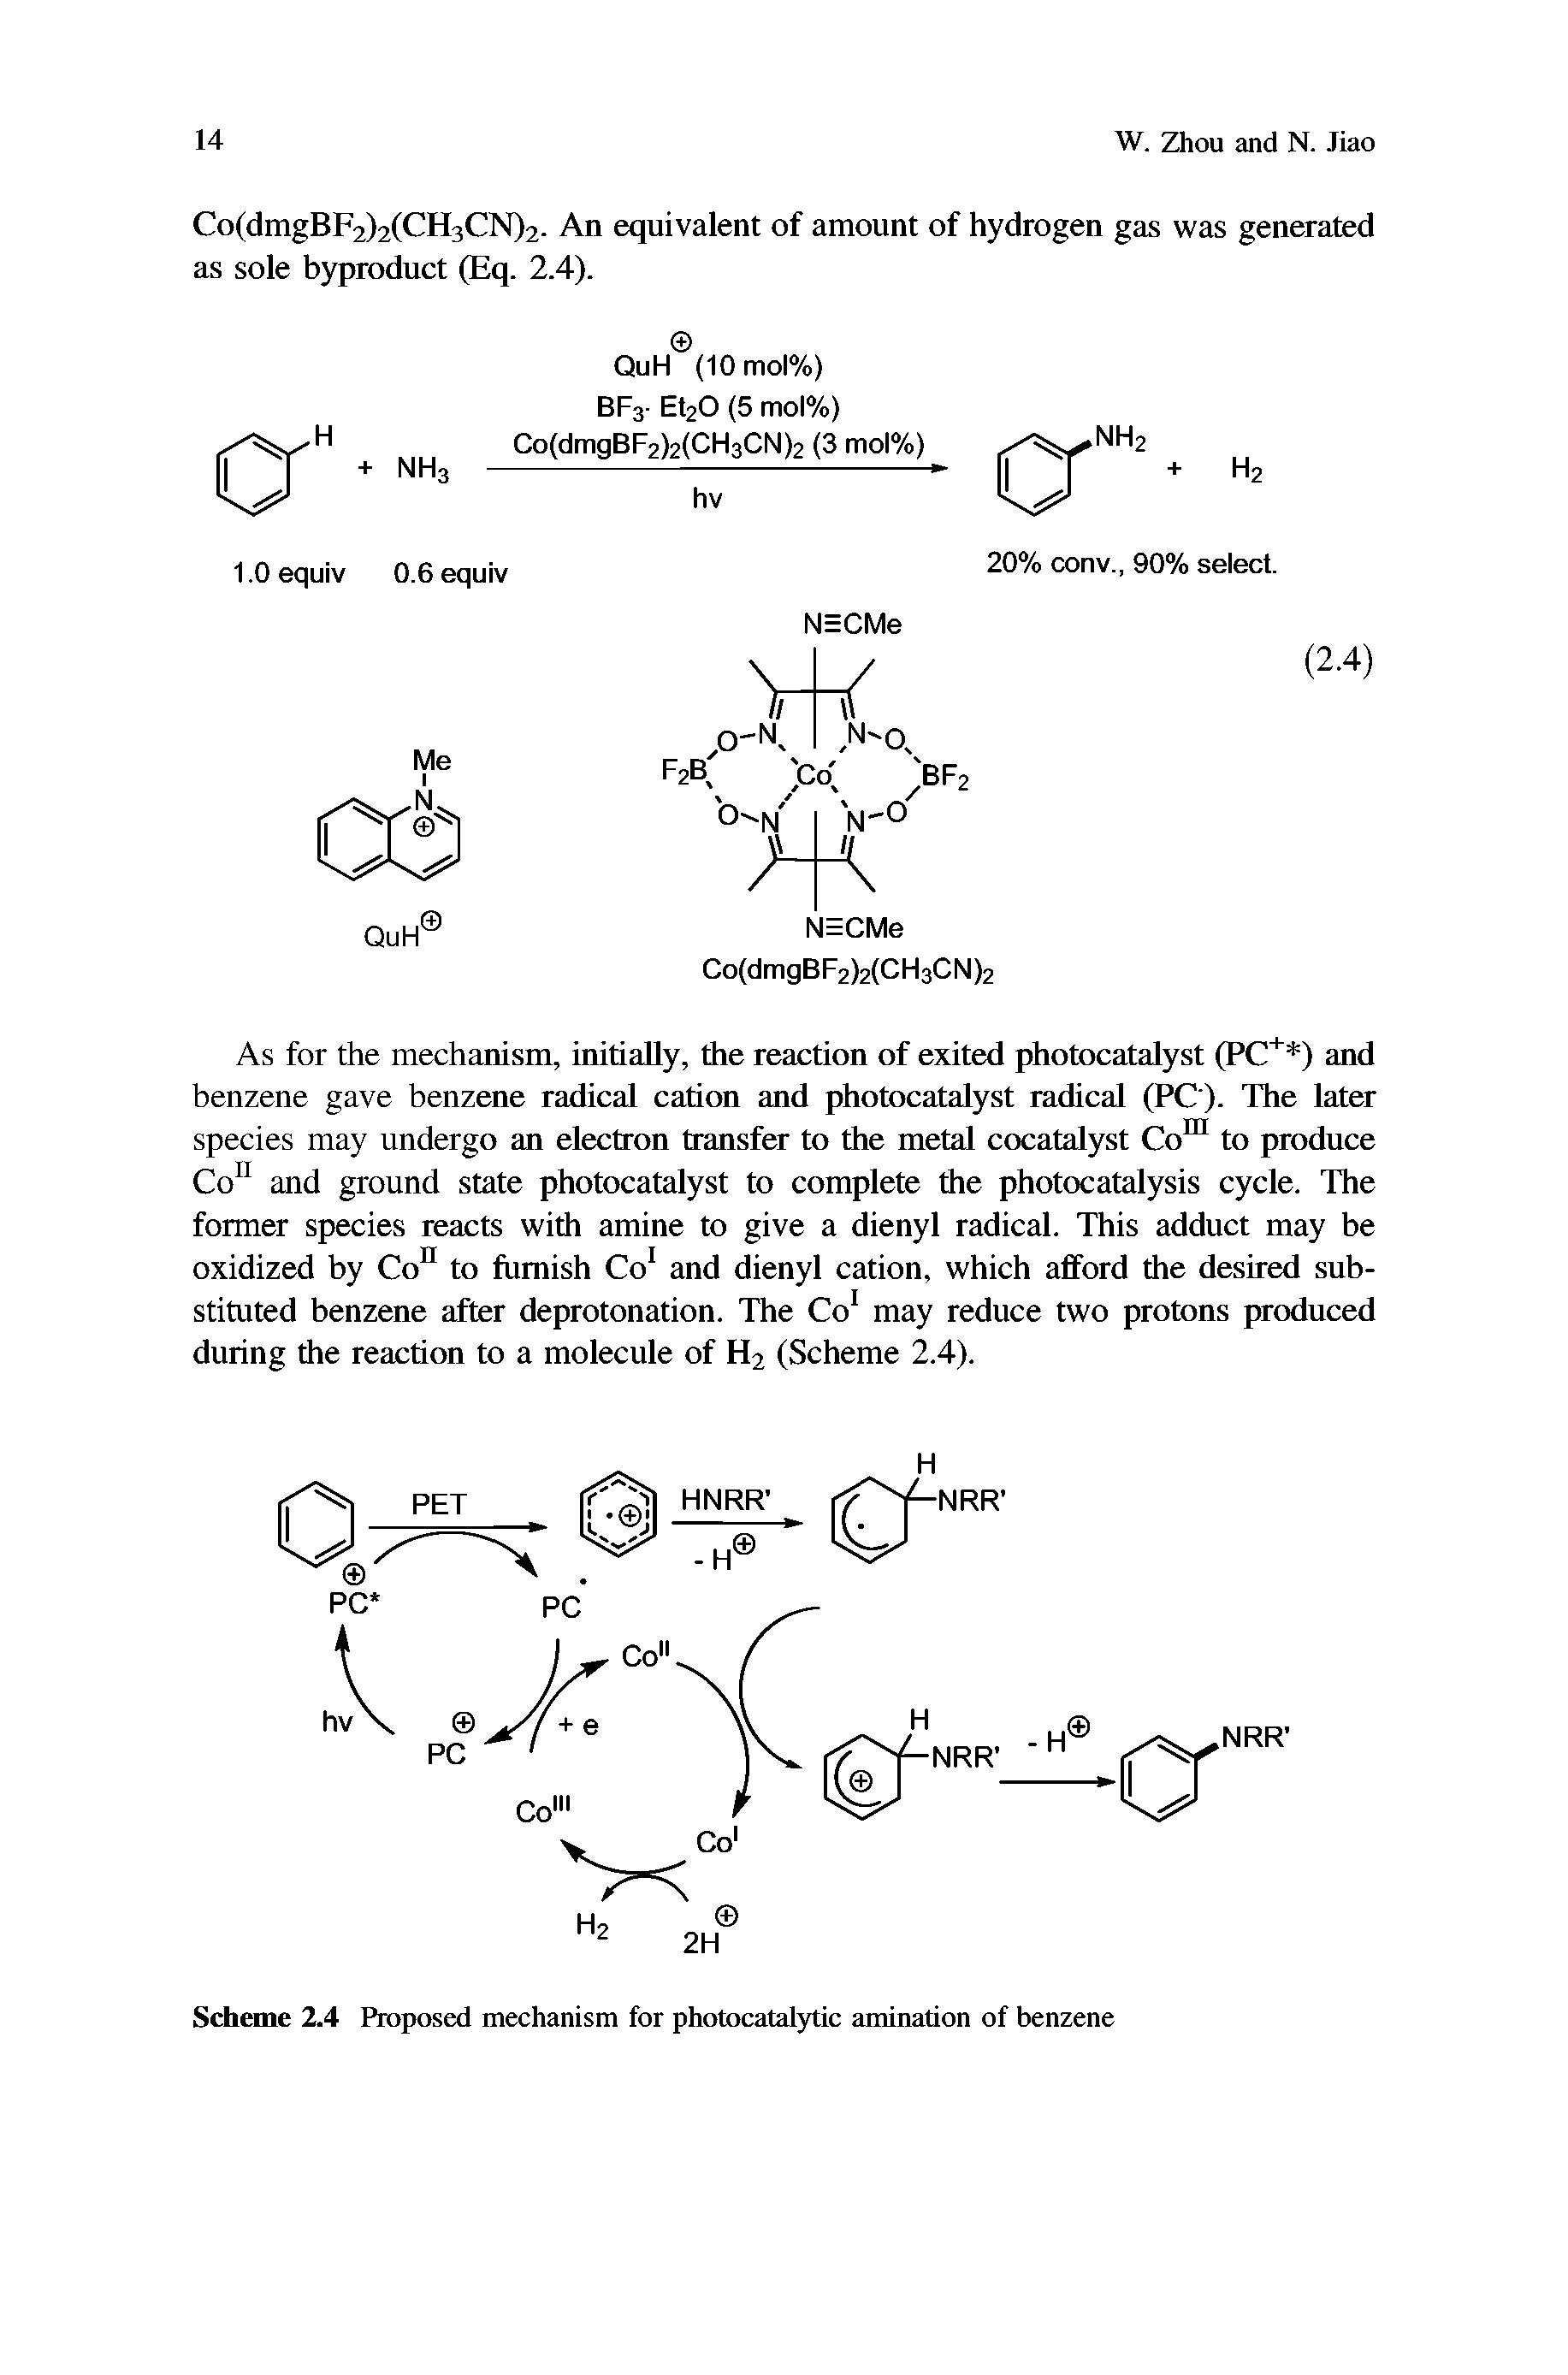 Scheme 2.4 Proposed mechanism for photocatalytic amination of benzene...